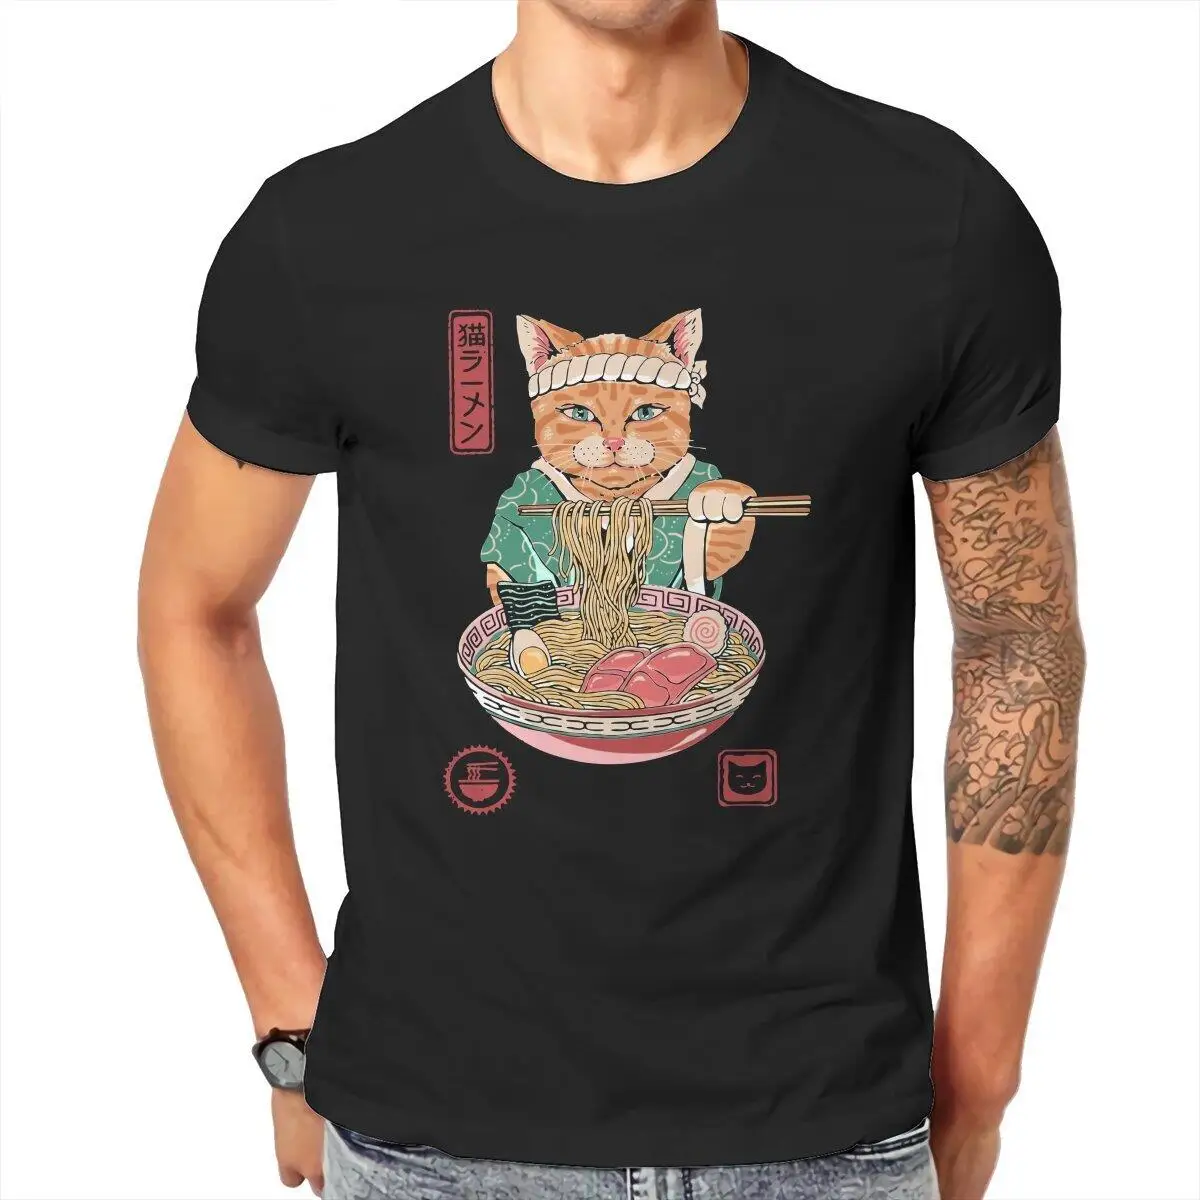 Vintage Neko Ramen Cat  T-Shirt for Men 100% Cotton T Shirts Cute Japanese Genki Short Sleeve Tee Shirt New Arrival Clothes